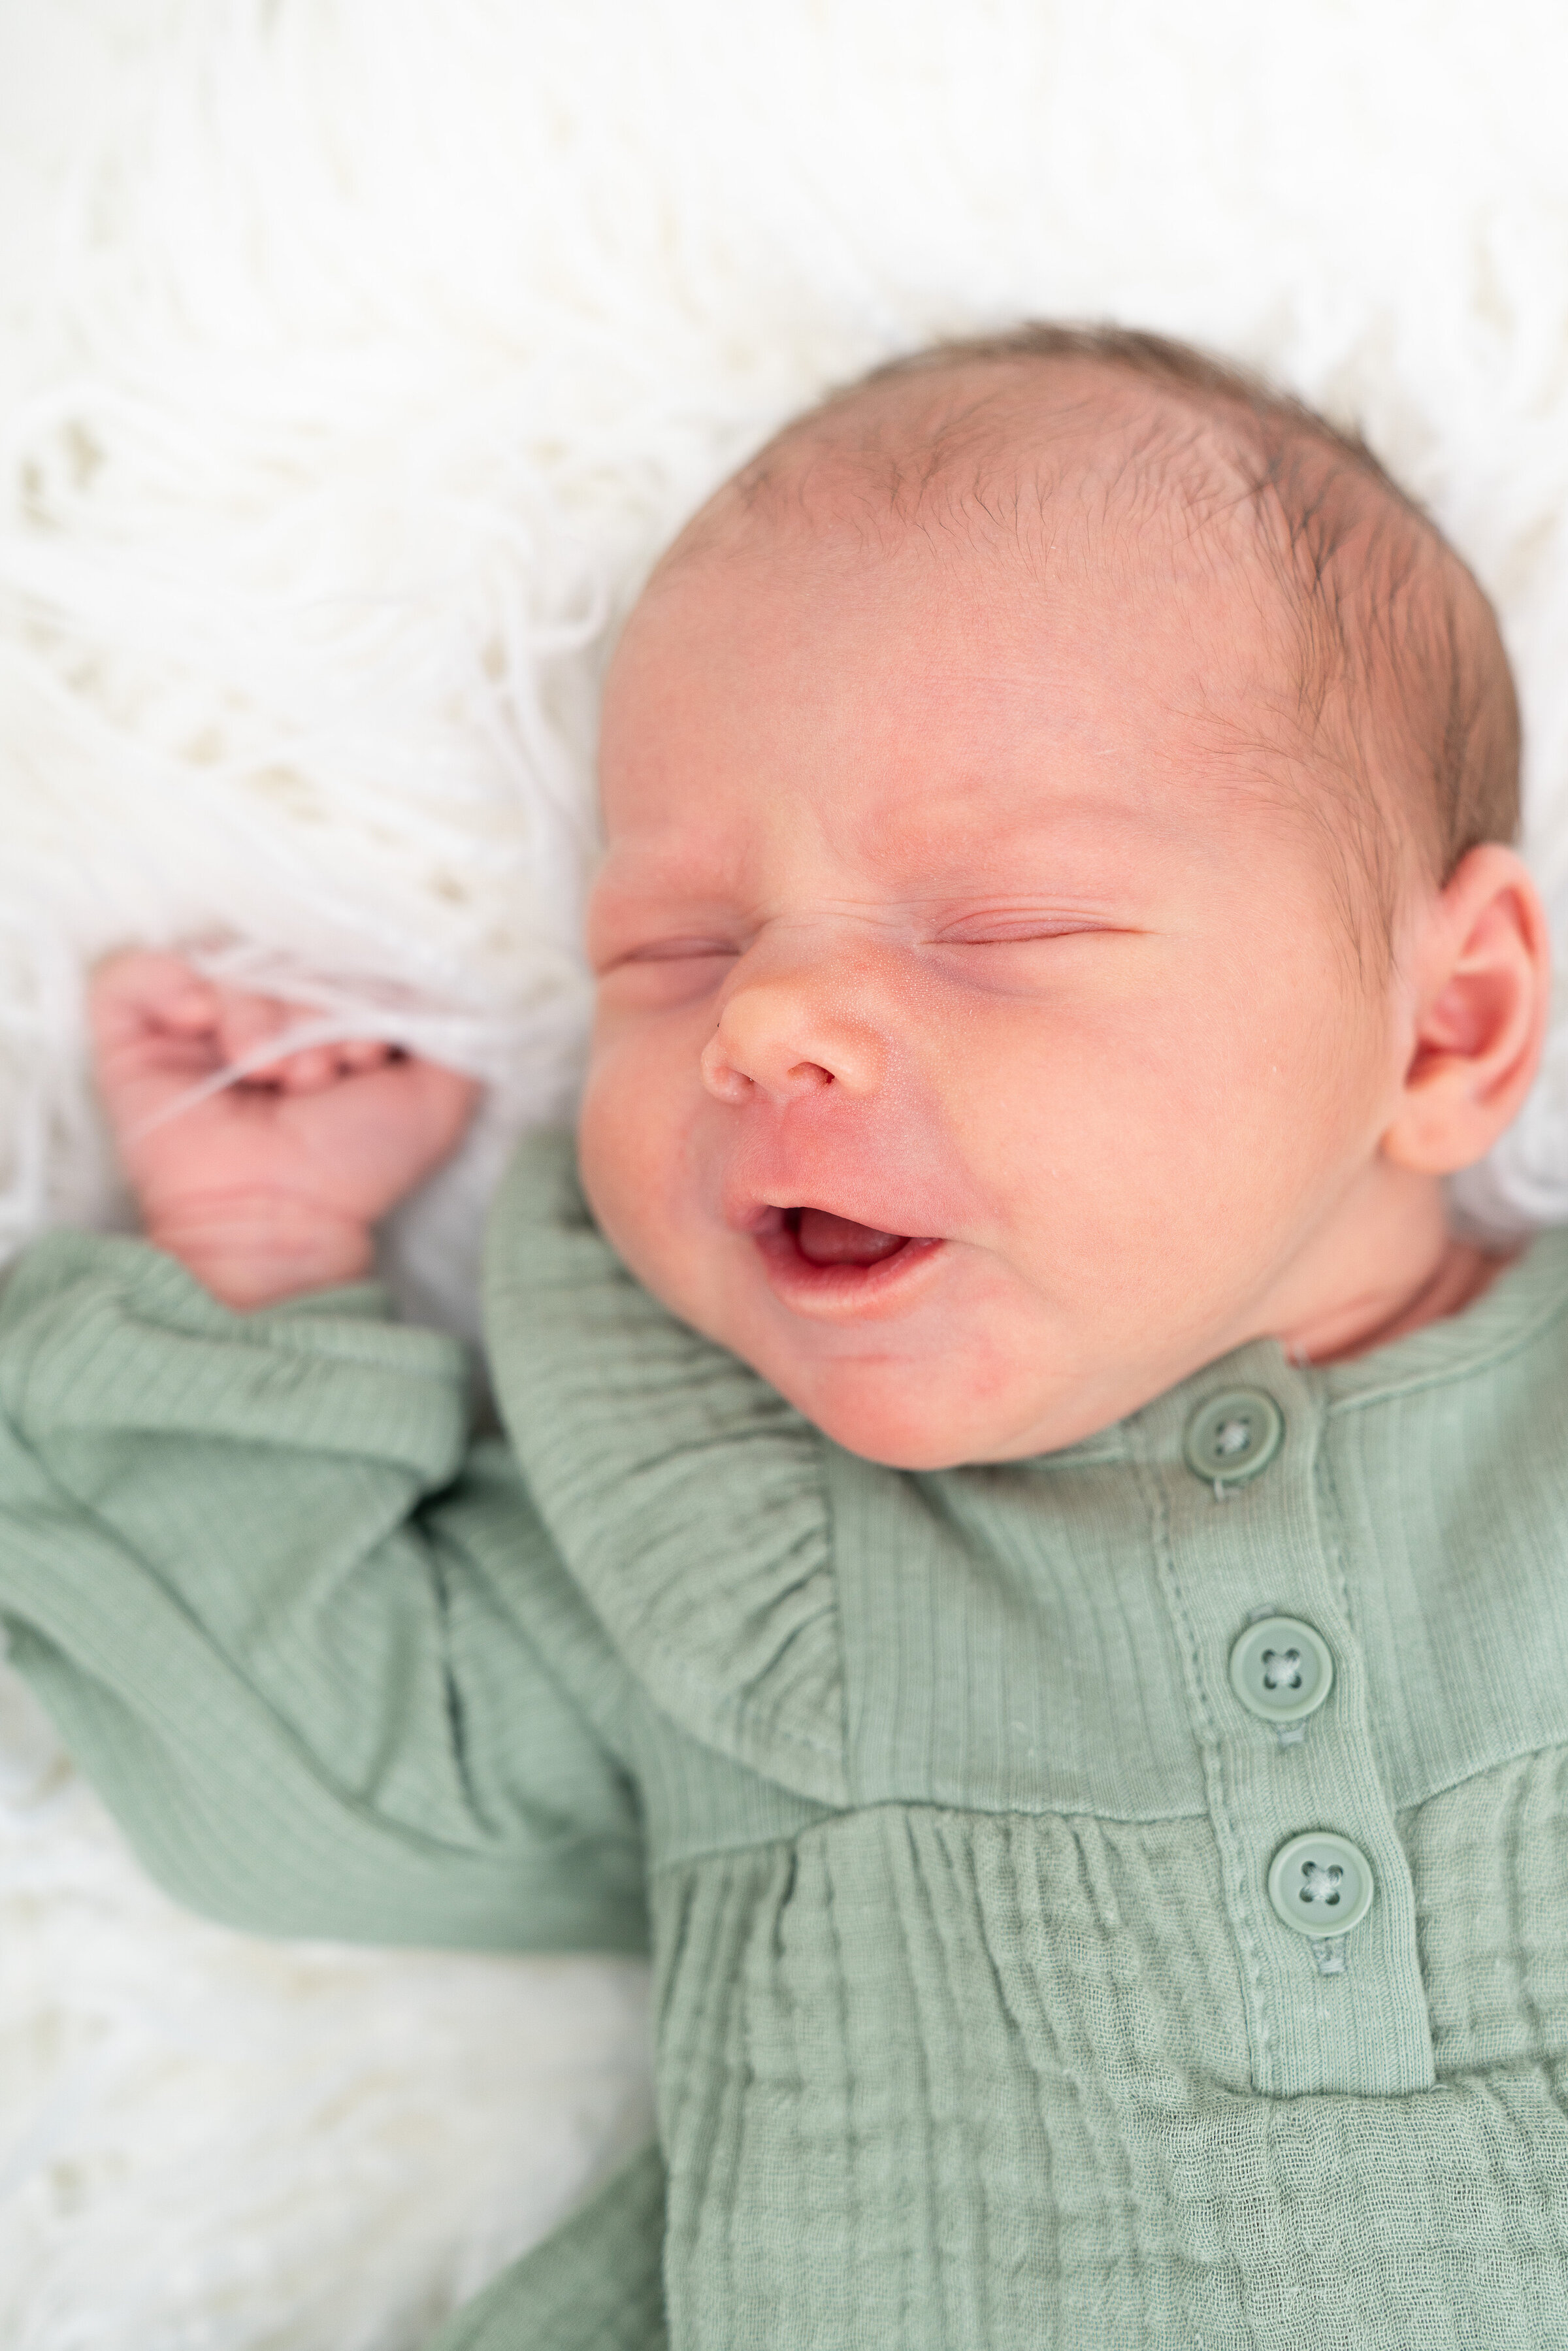 Newborn baby girl smiling in her sleep